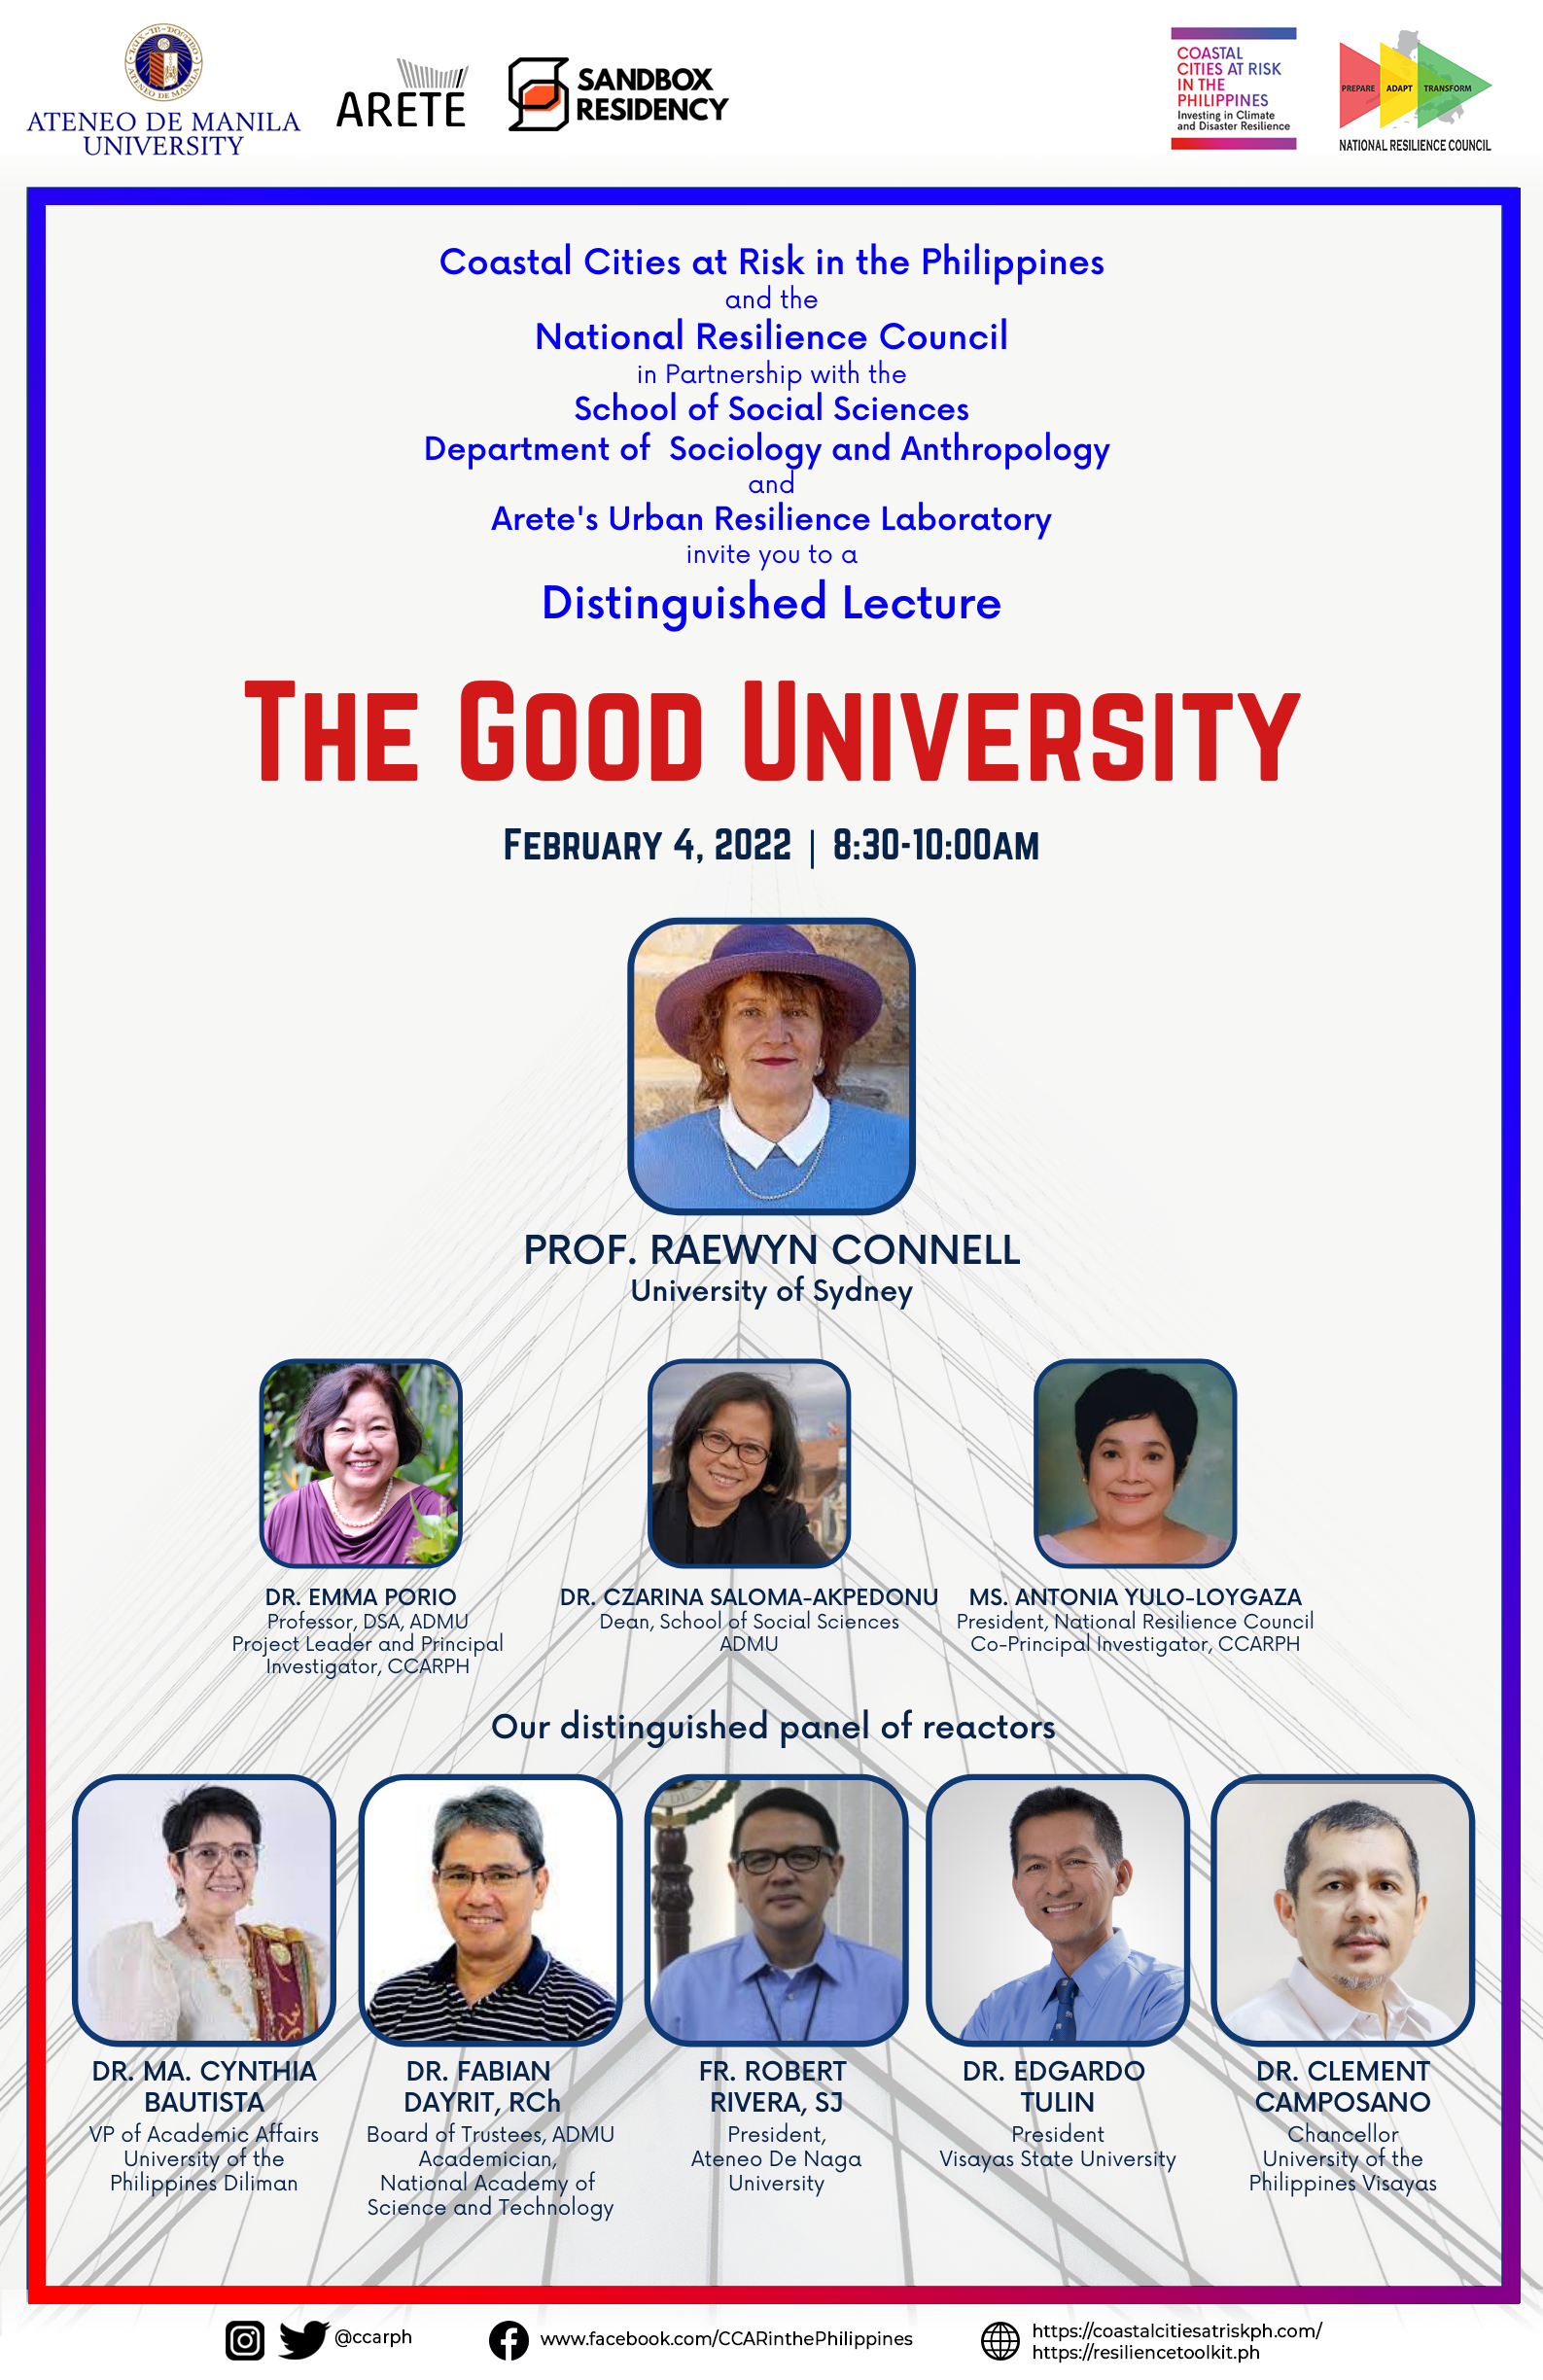 The Good University